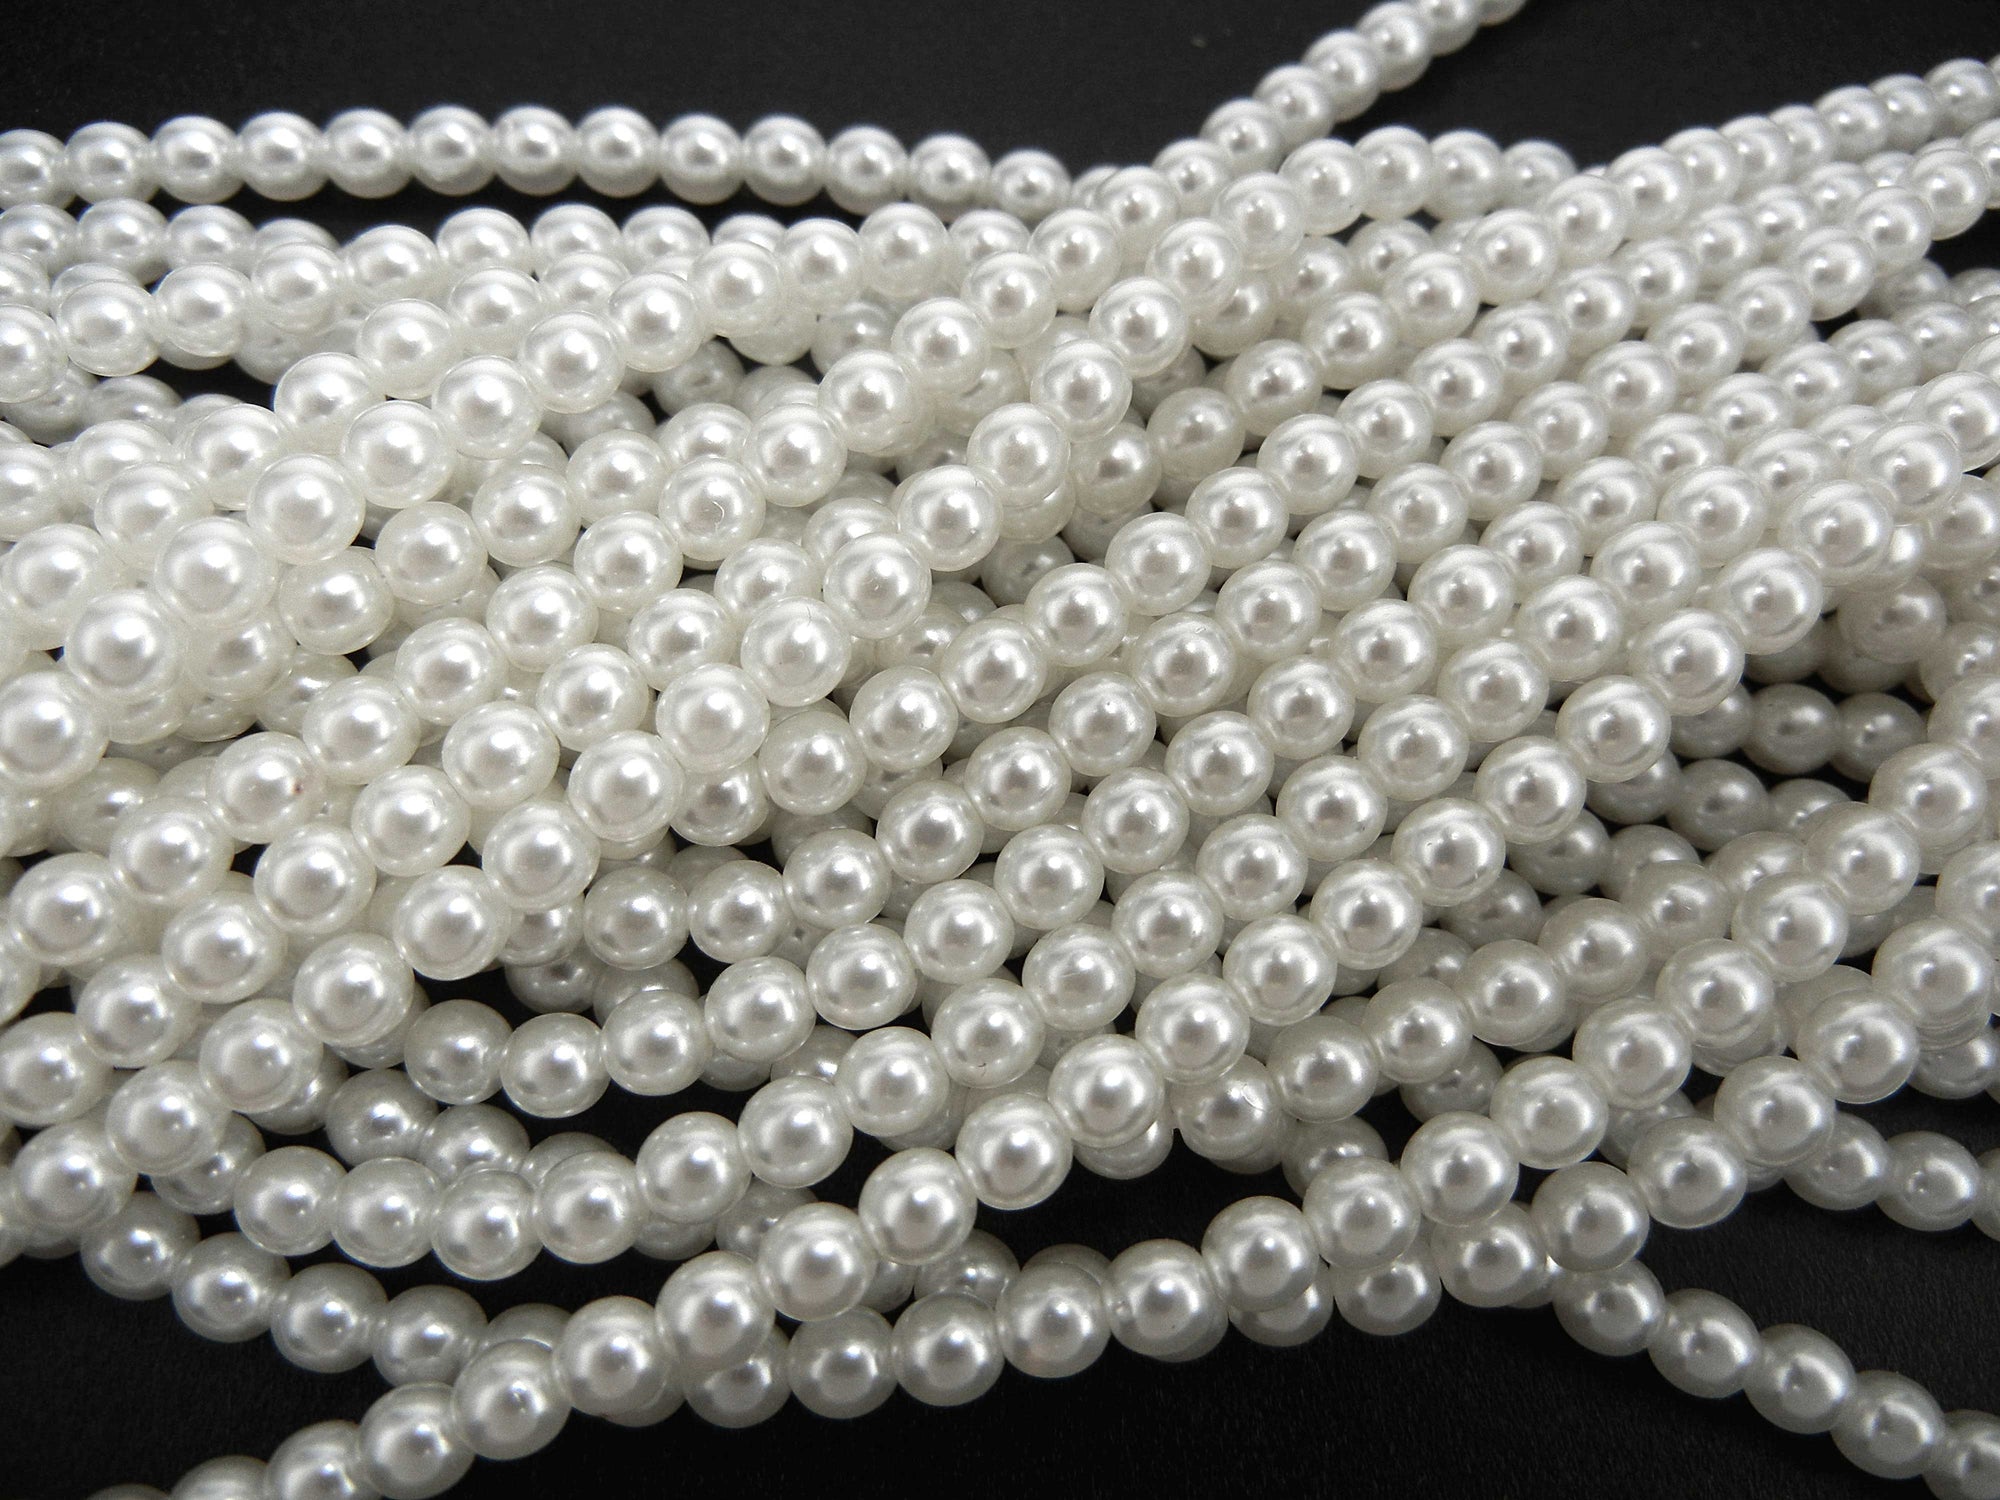 Fake Pearls Made Plastic Imitation Jewelry Stock Photo 243846517